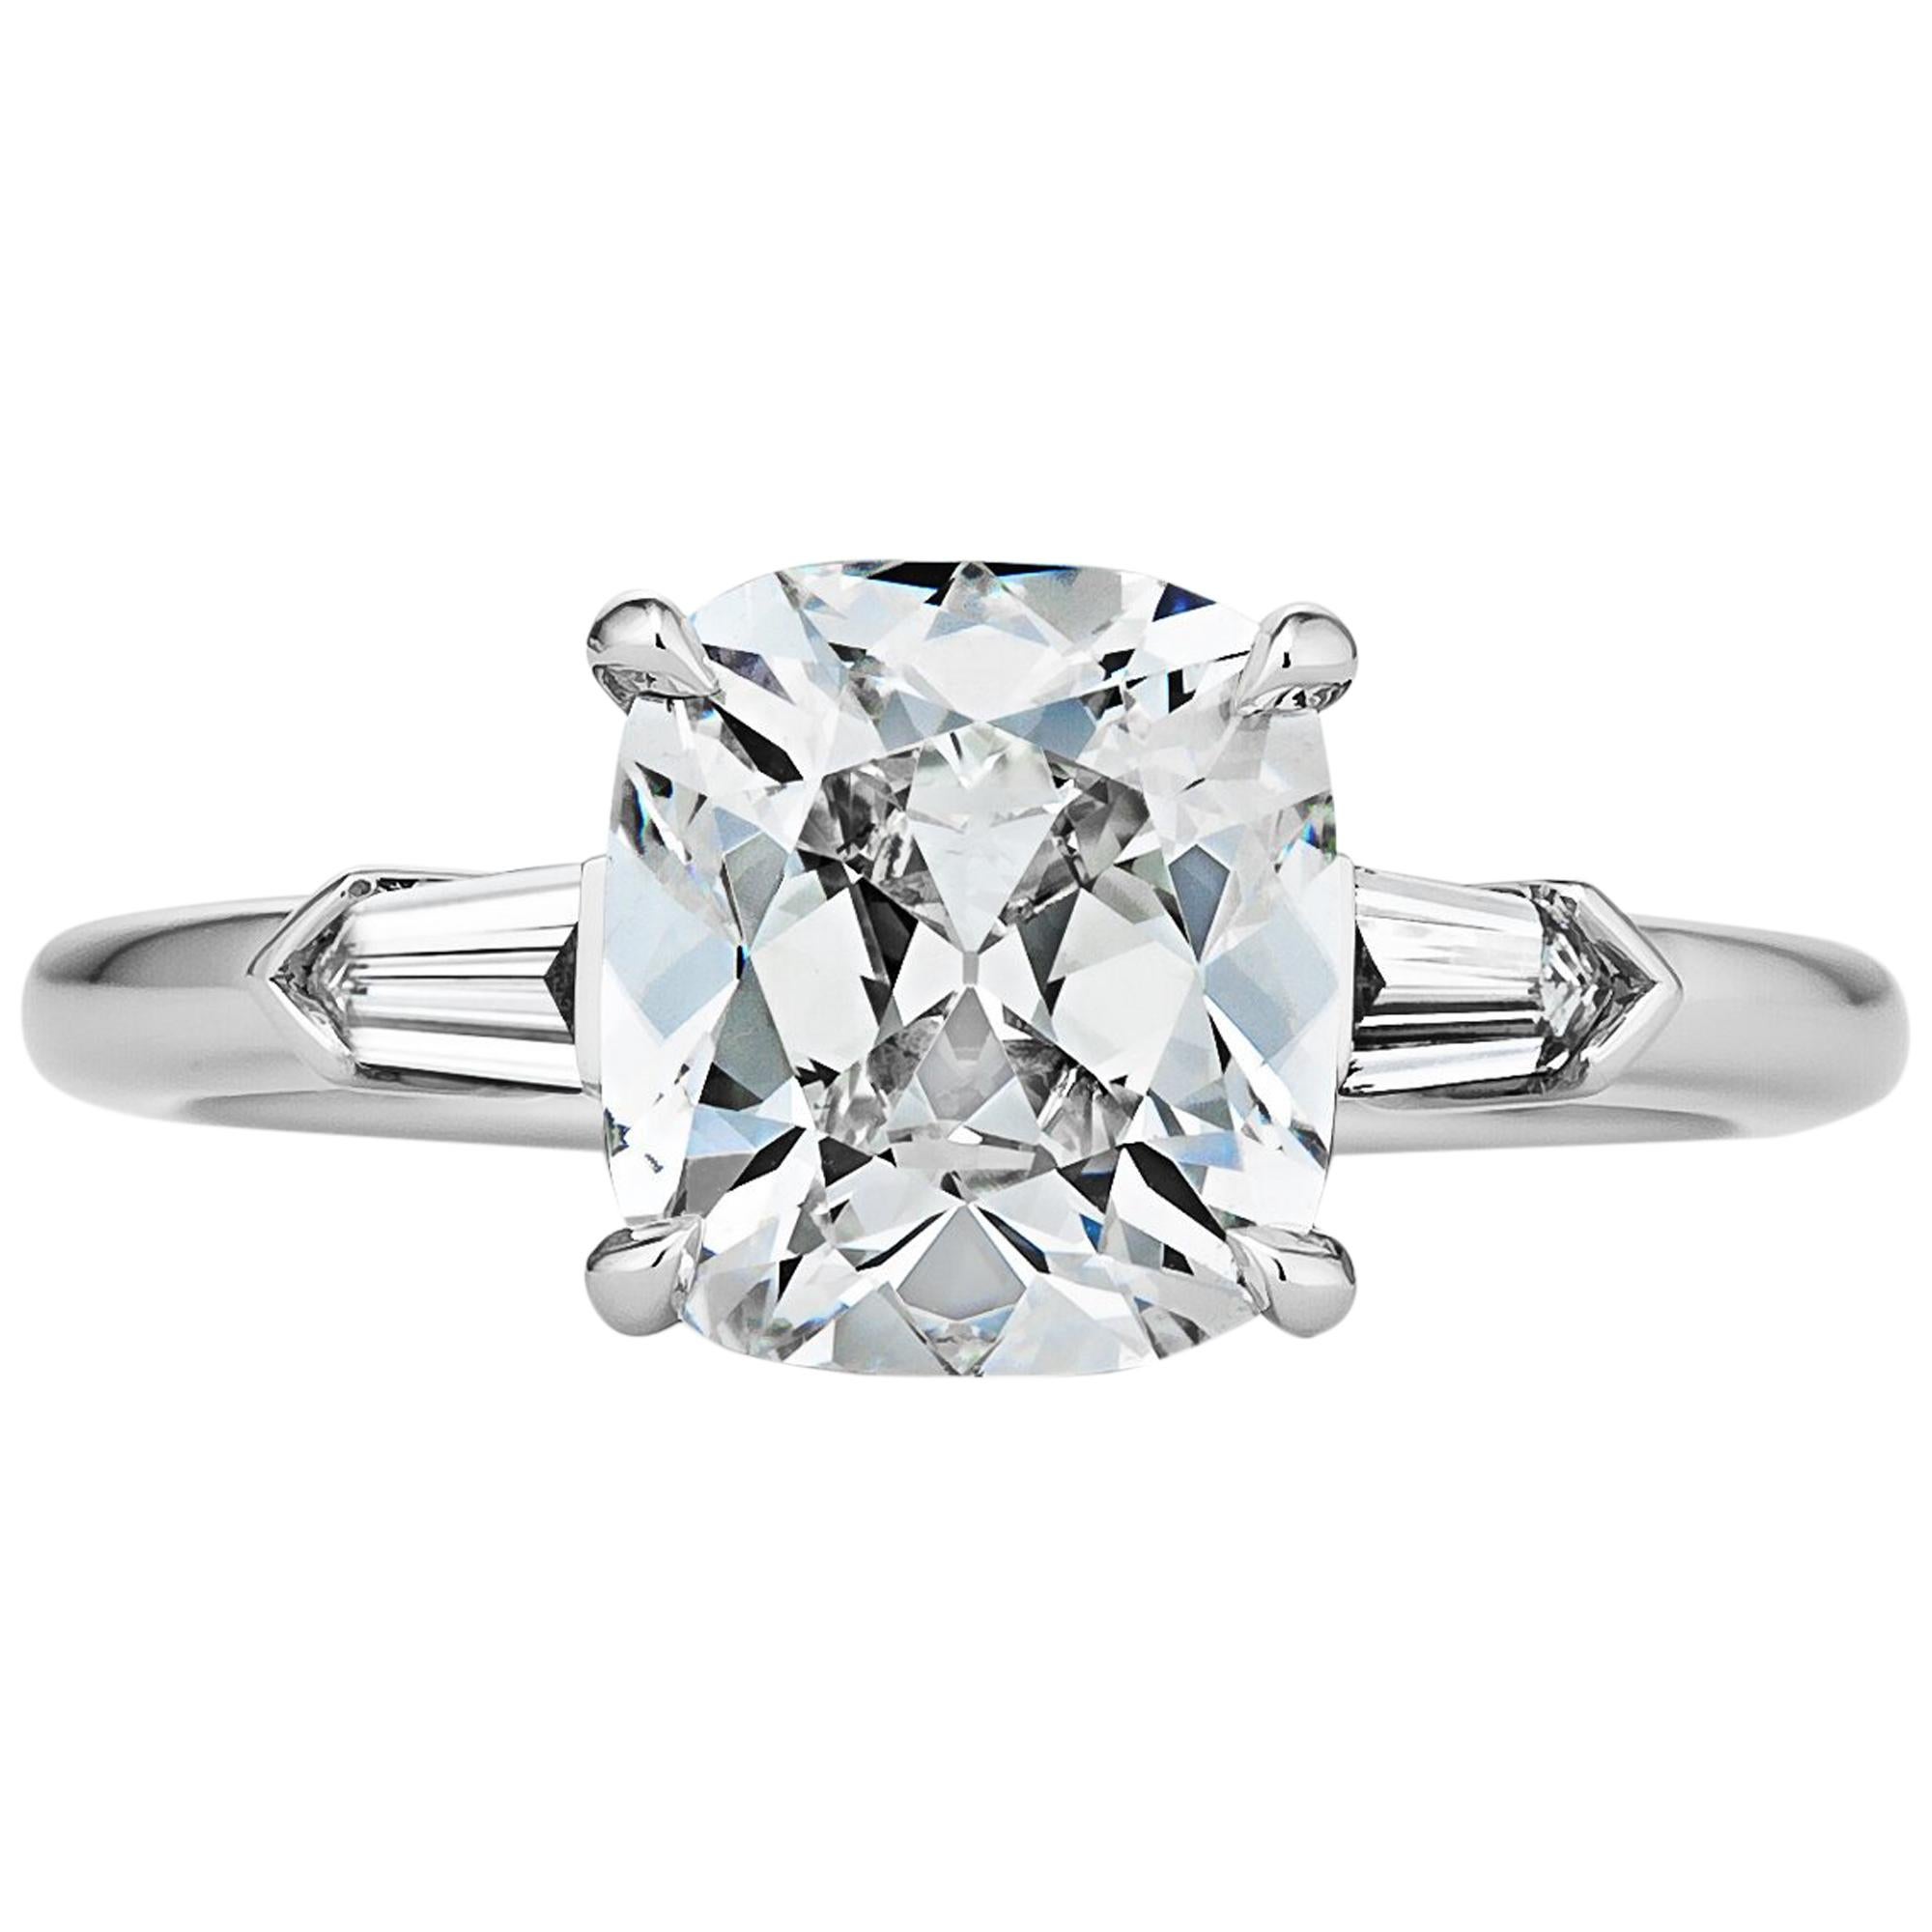 2.27 Carat Cushion Brilliant Cut Diamond Platinum Handmade Engagement Ring